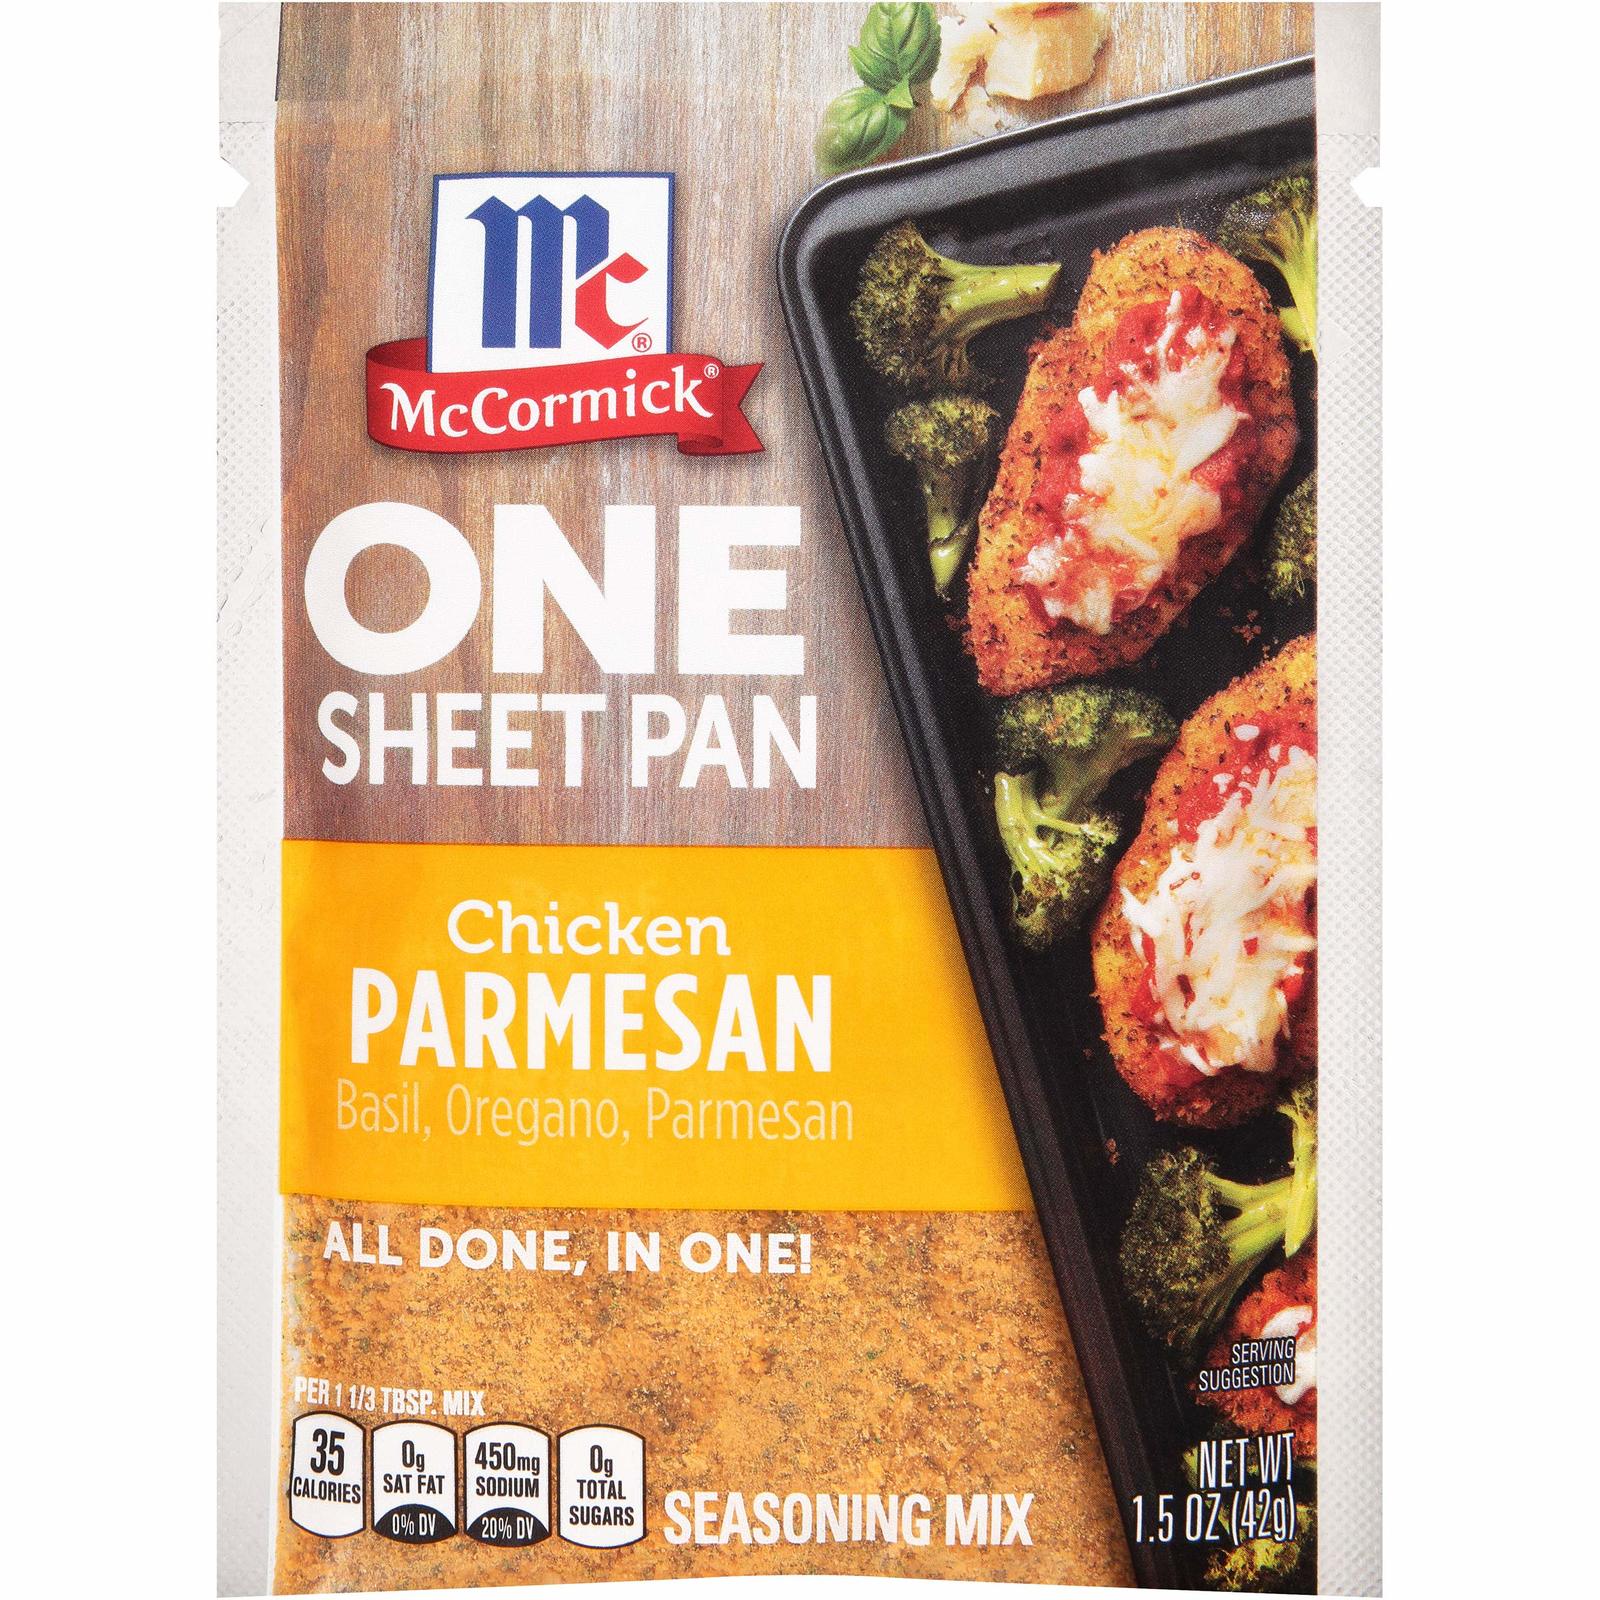 McCormick ONE Sheet Pan Chicken Parmesan Seasoning Mix, 1.5 oz 12 Count(Pack of  - $5.93 - $34.60